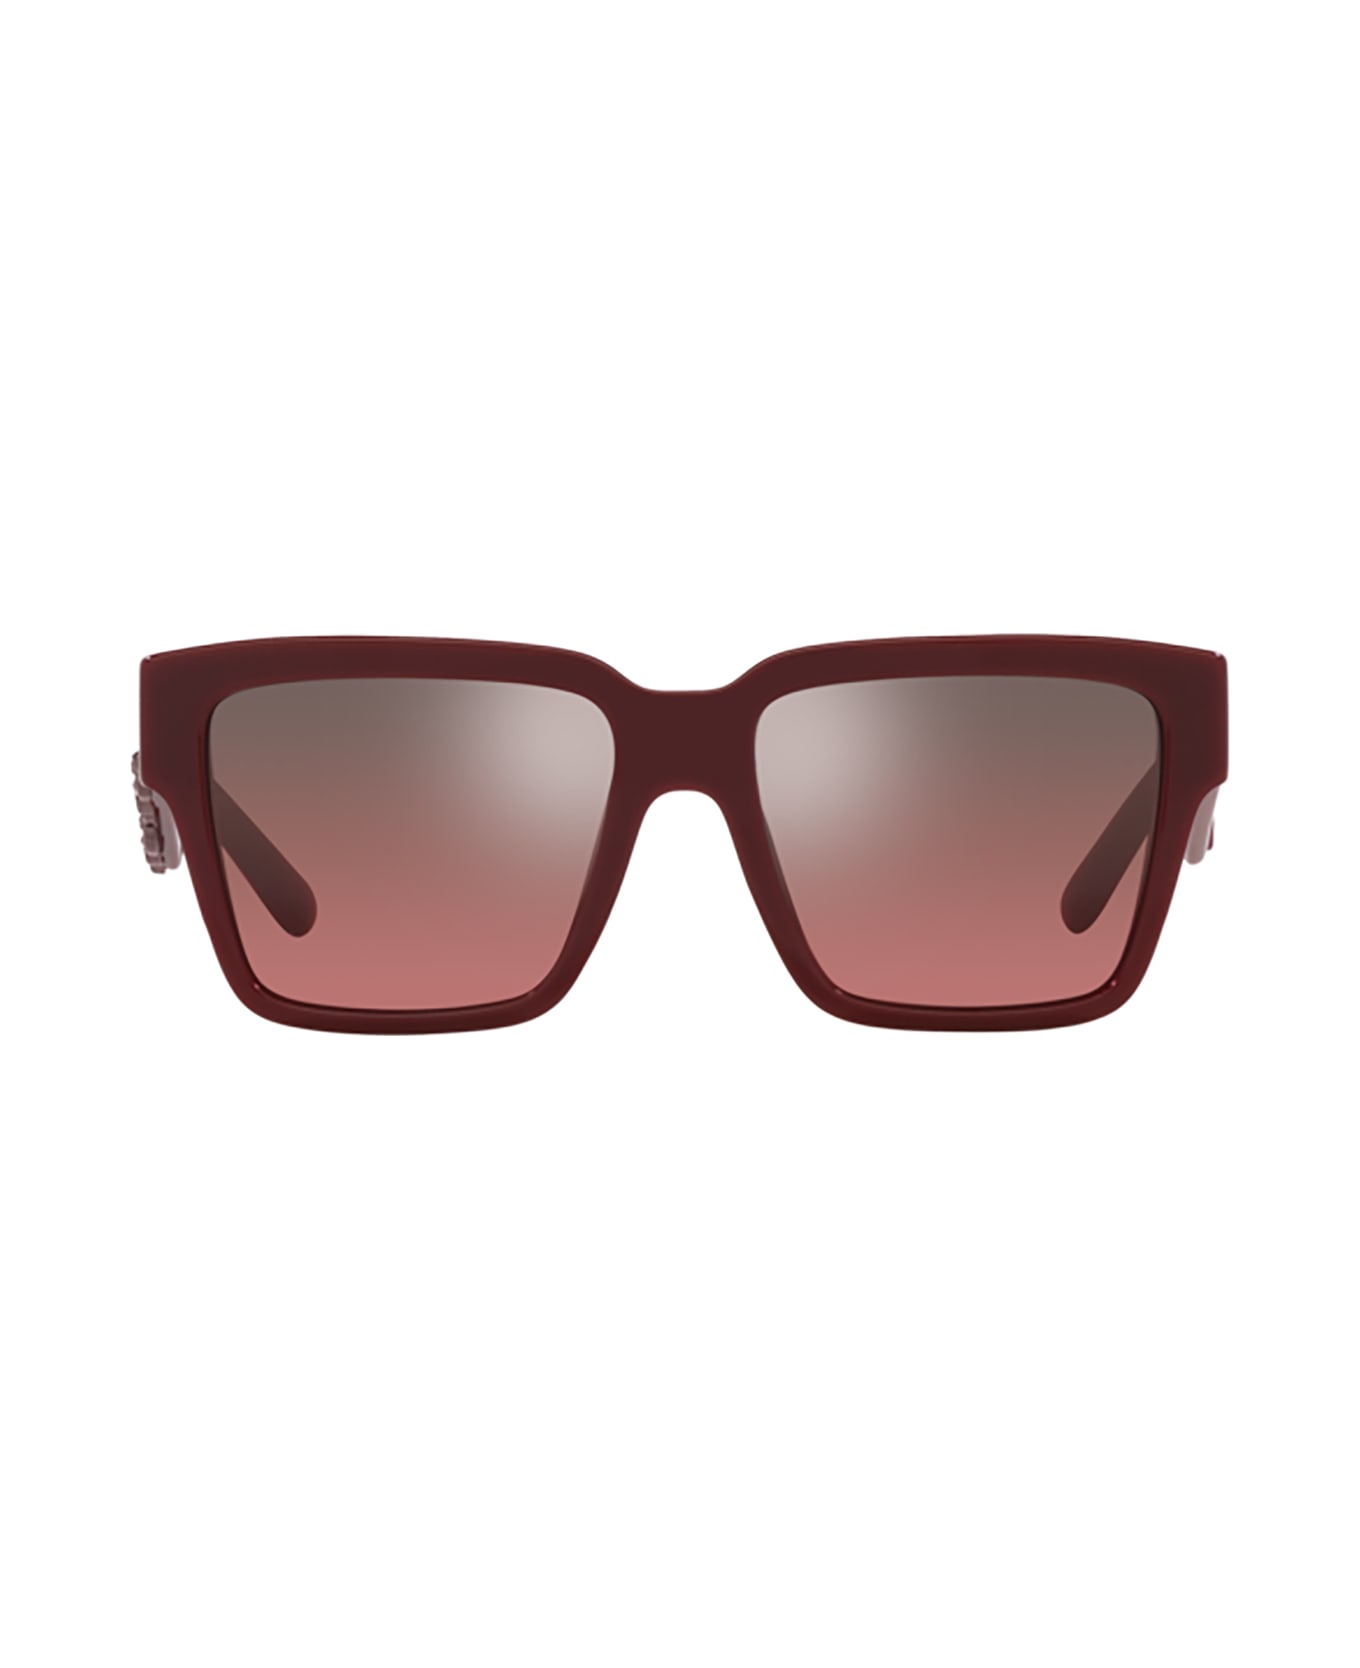 Dolce & Gabbana Eyewear Dg4436 Bordeaux Sunglasses - Bordeaux